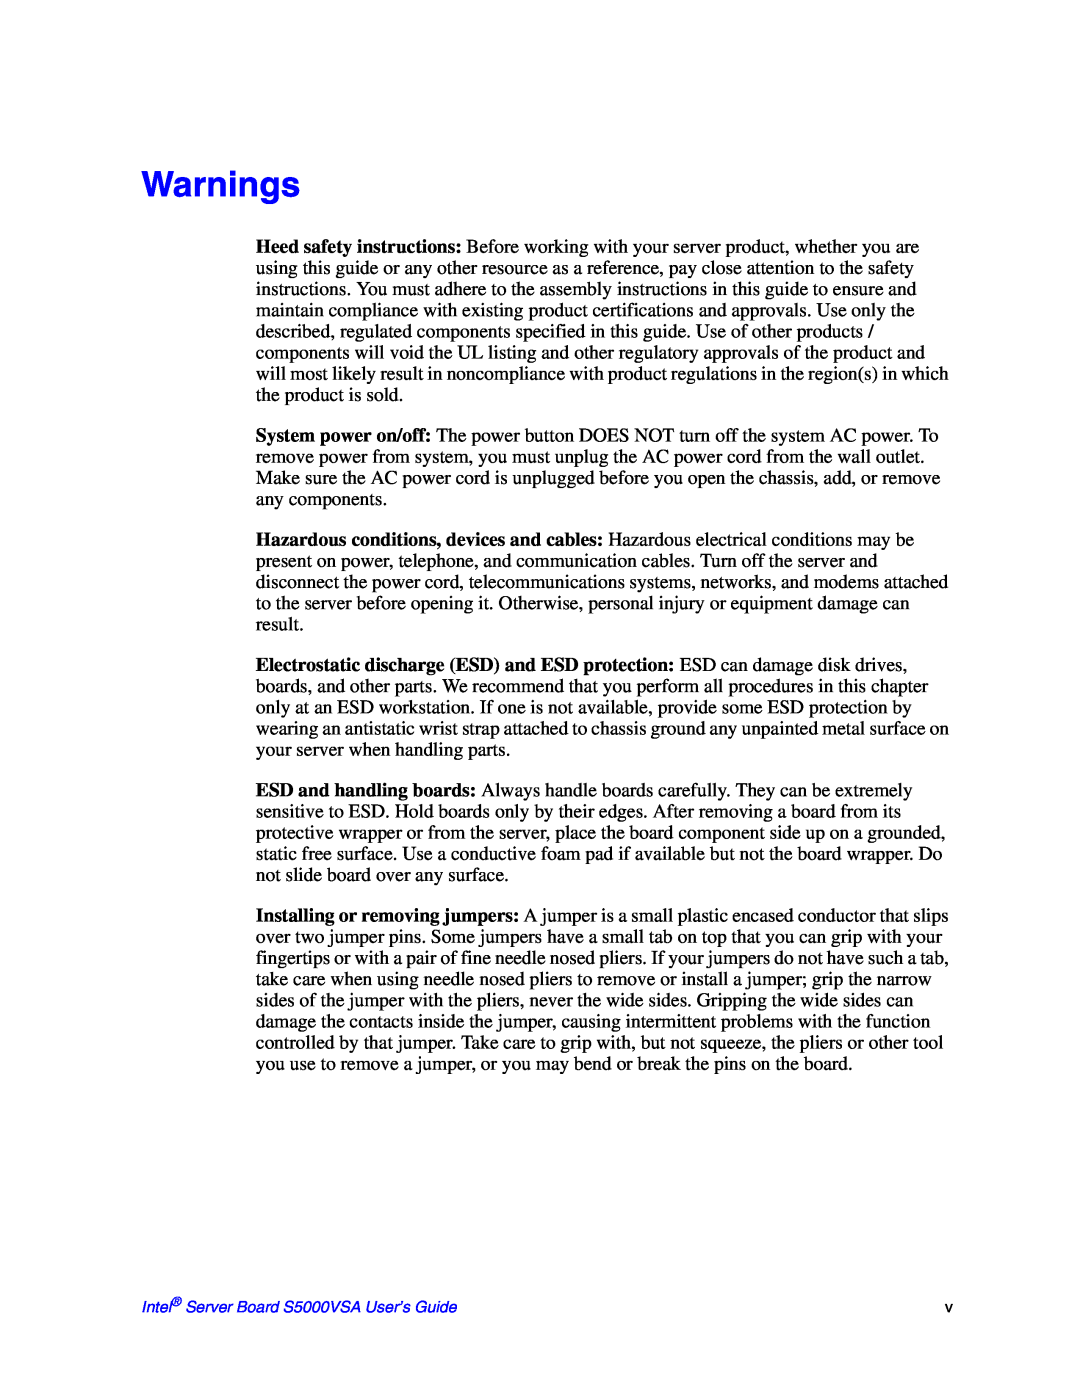 Intel manual Warnings, Intel Server Board S5000VSA User’s Guide 